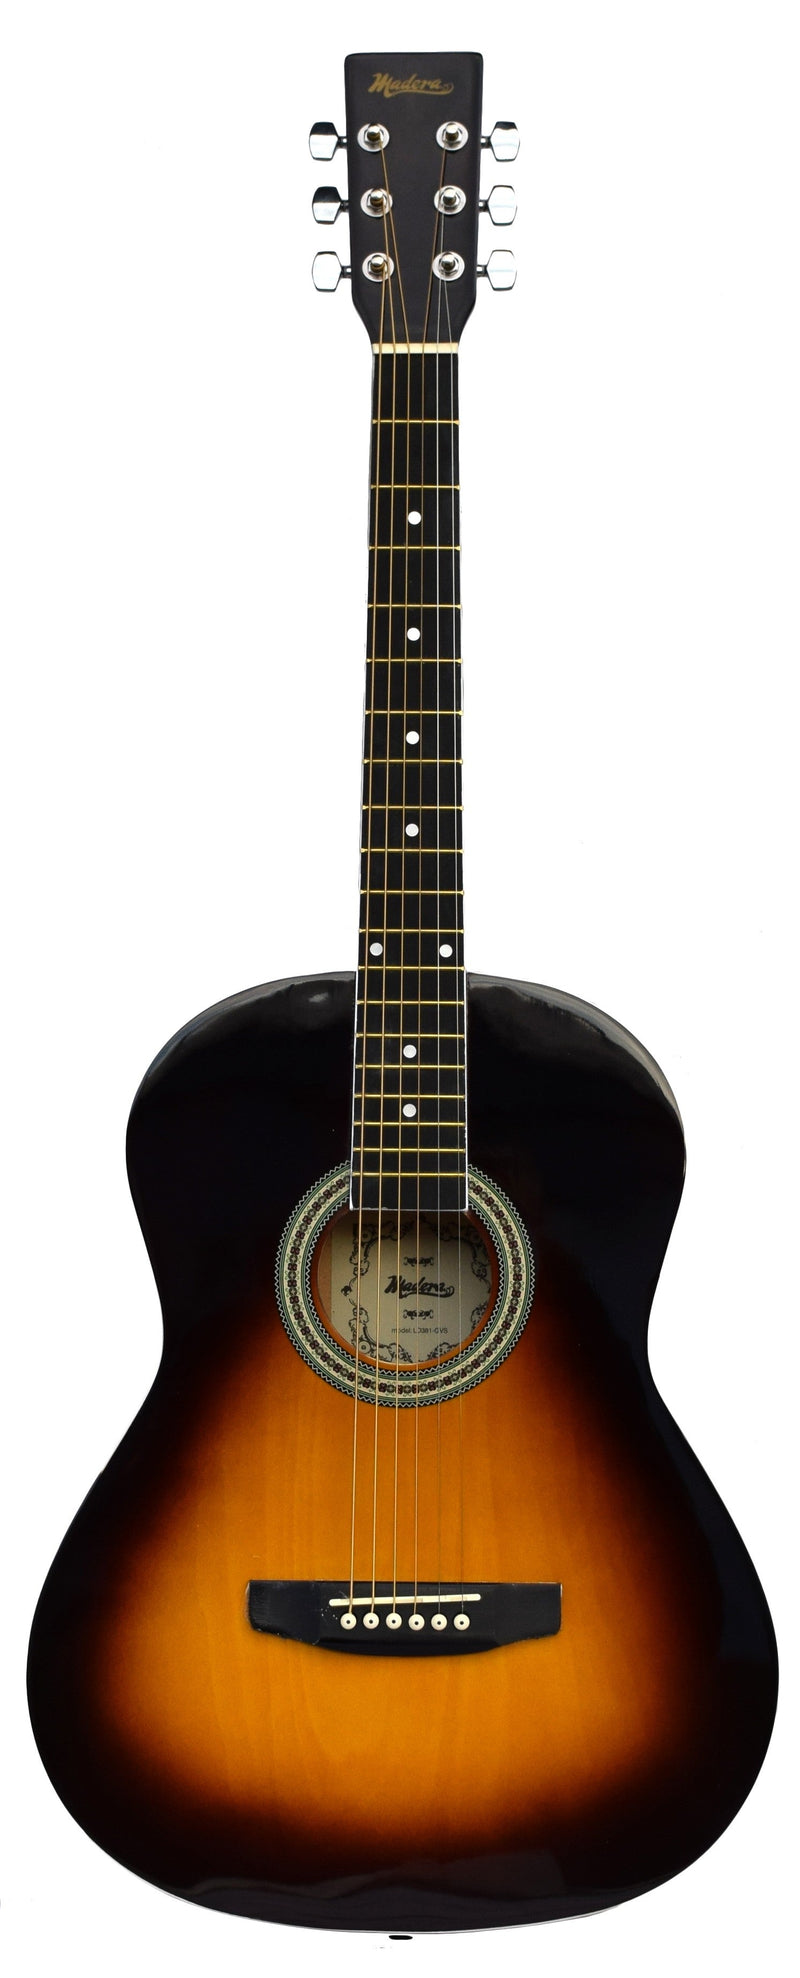 Madera LD381 Acoustic Guitar 38" (3/4 Size) Dark Vintage Sunburst Madera Instrument for sale canada